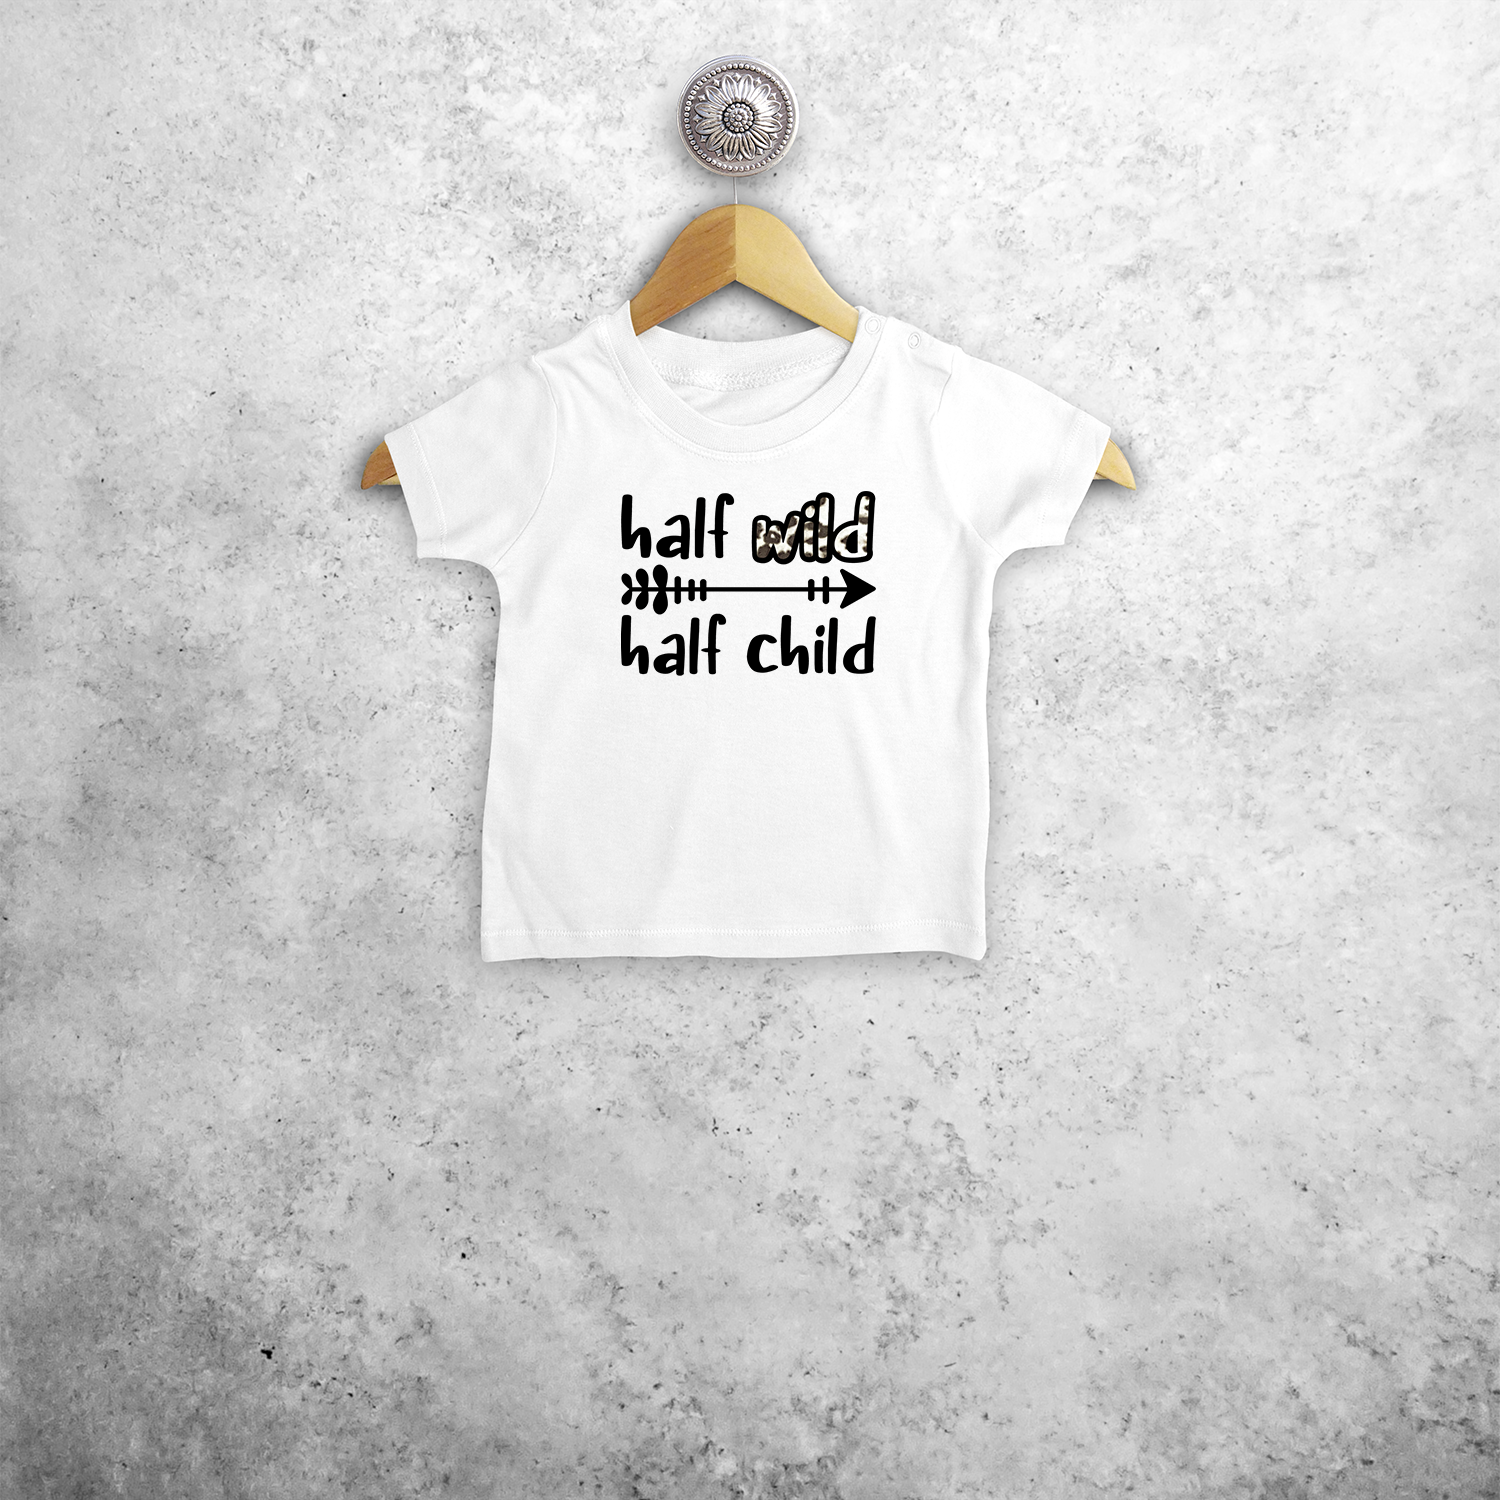 'Half wild, Half child' baby shortsleeve shirt